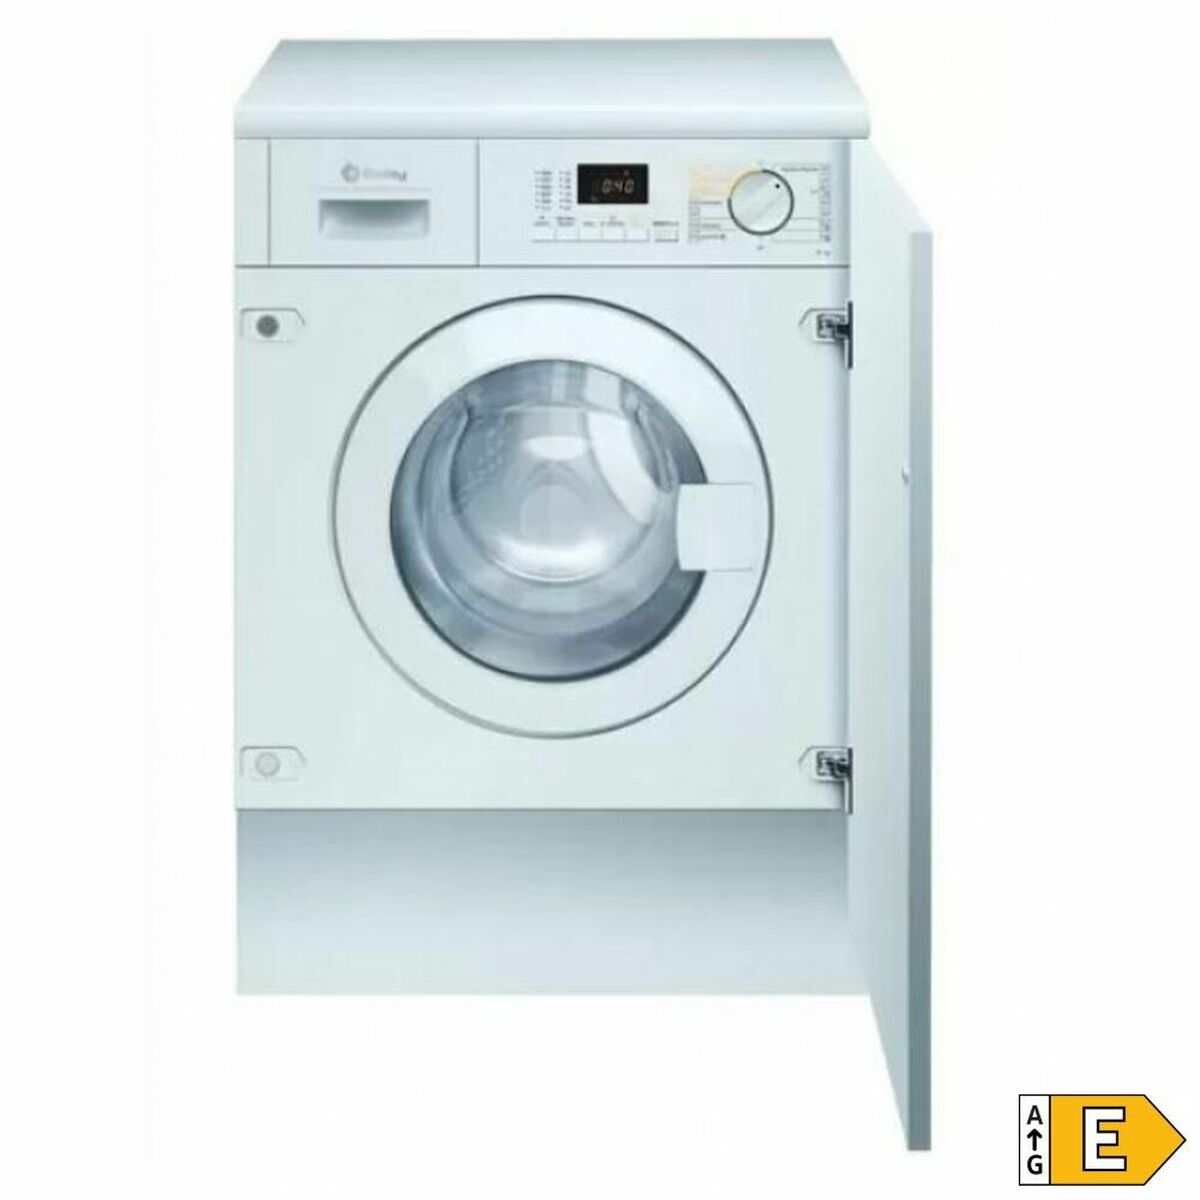 Washer - Dryer Balay 3TW773B 7kg / 4kg 1200 rpm Wit